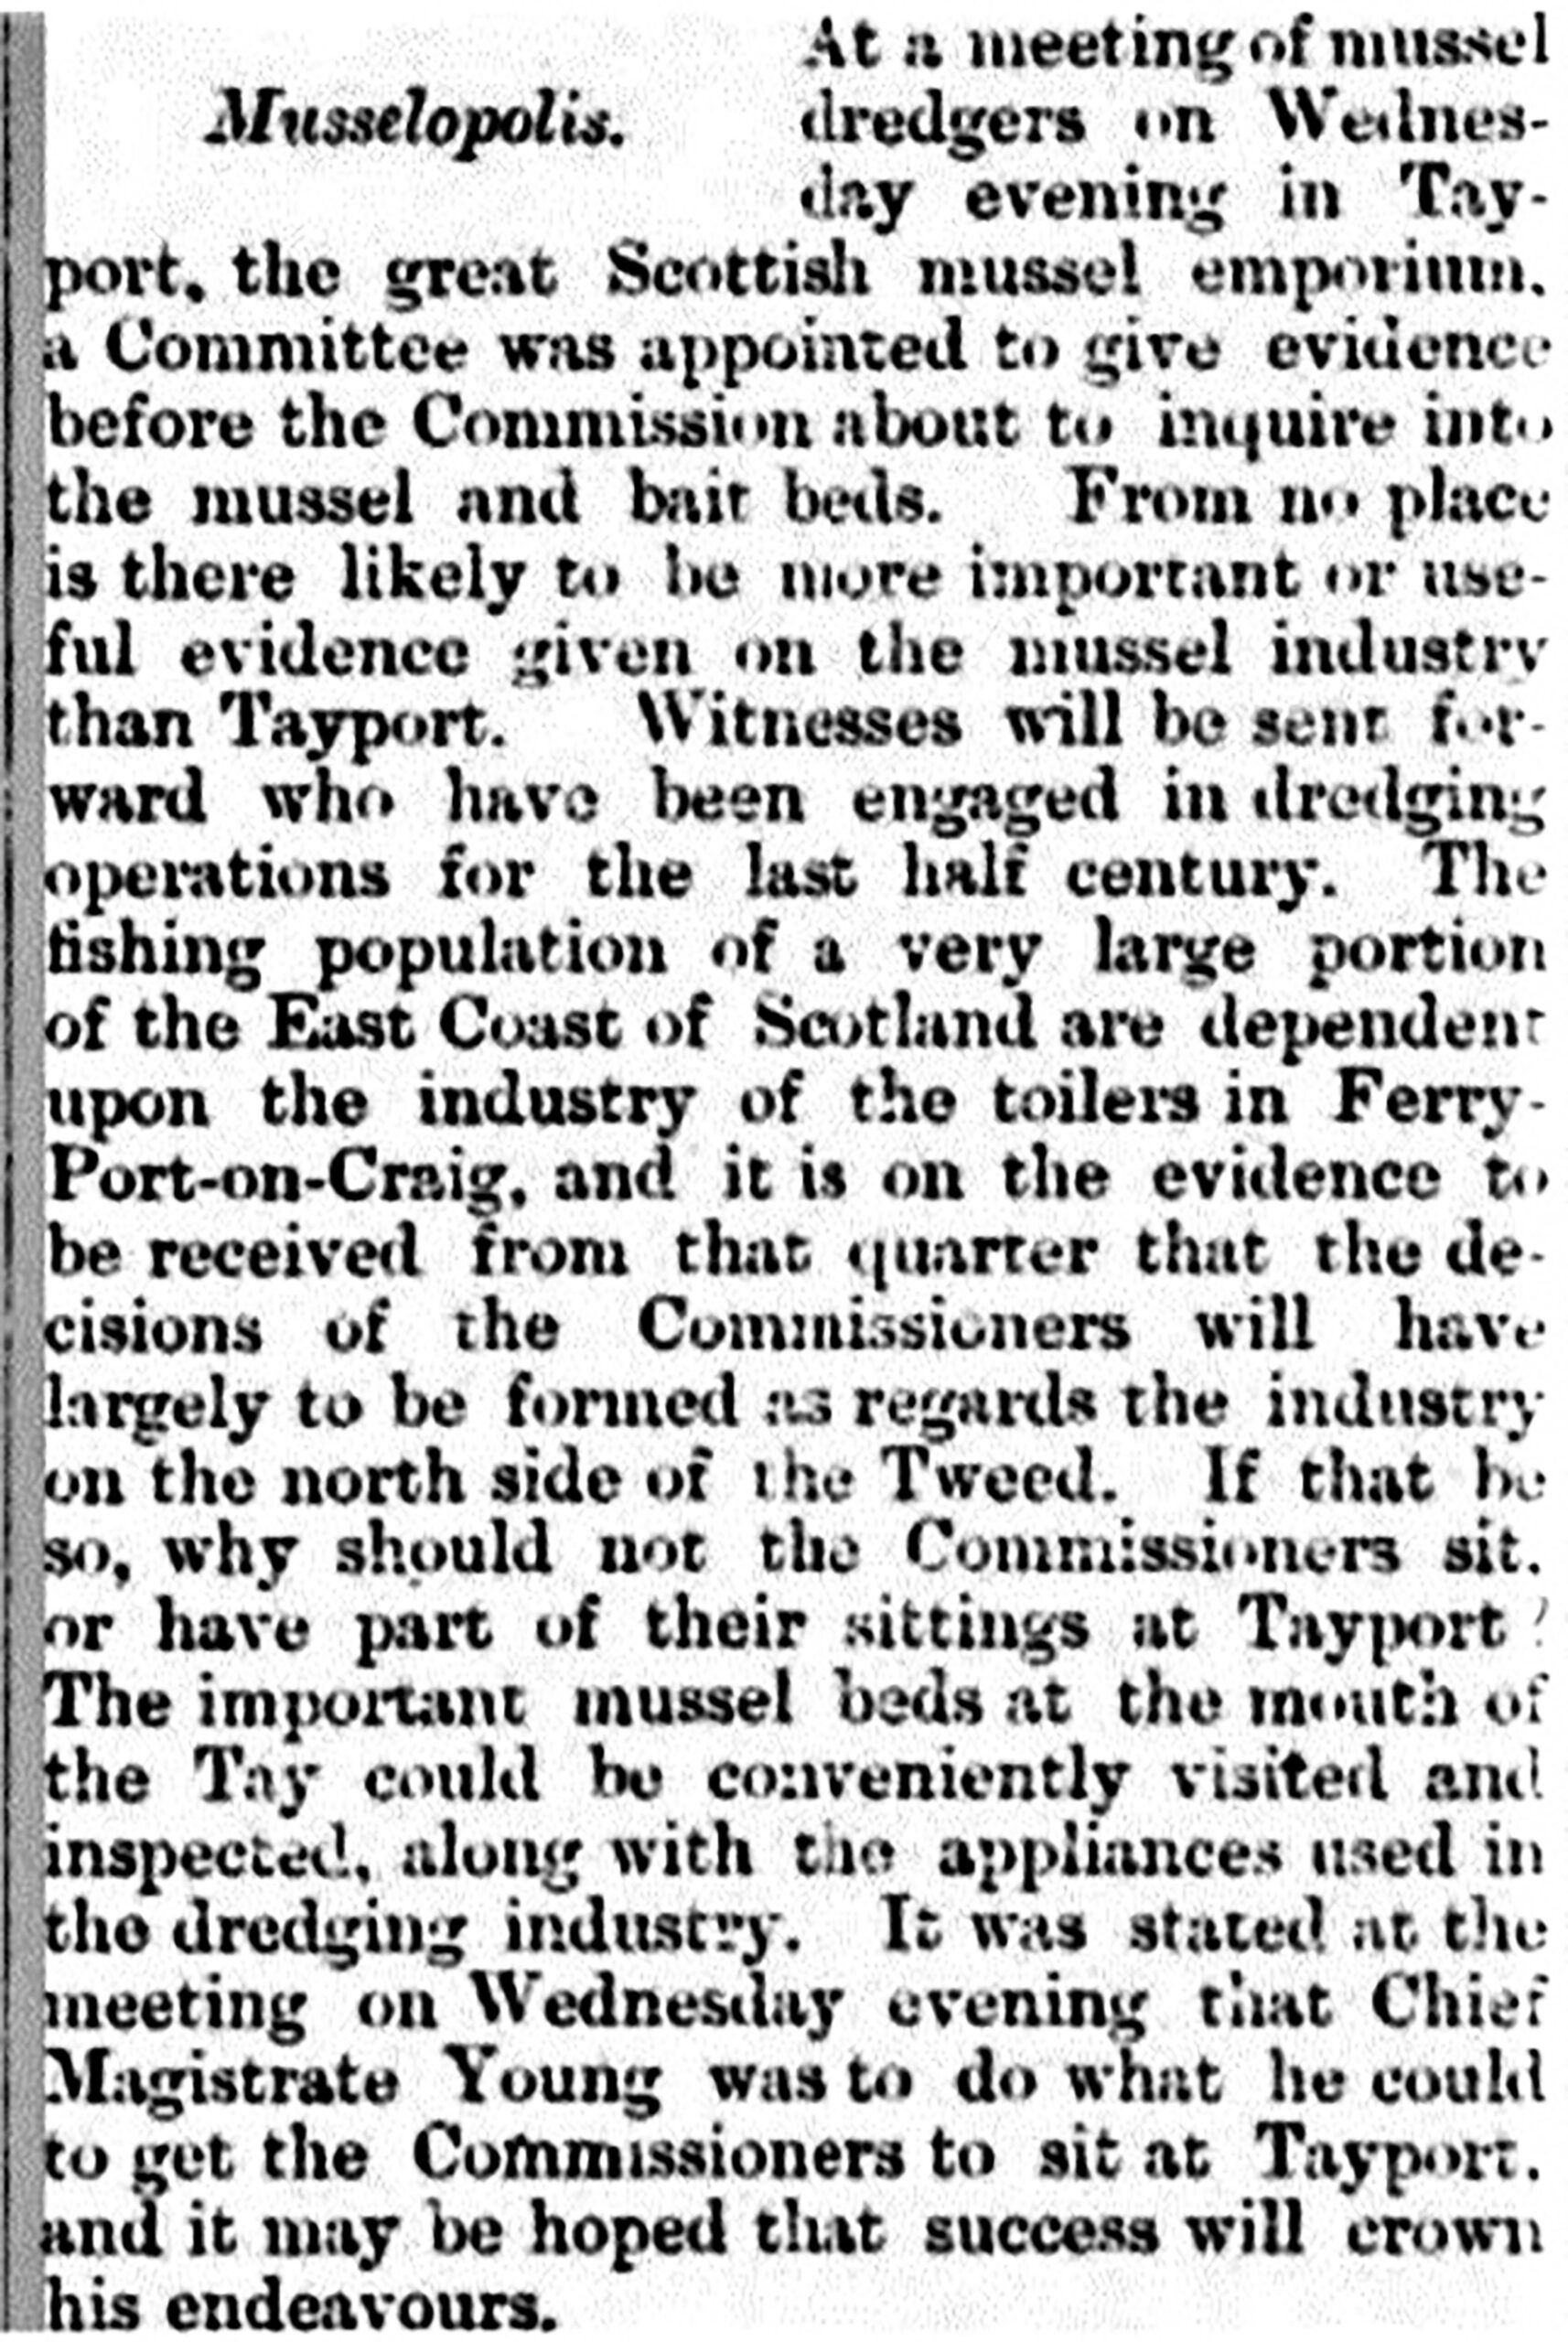 Tayport Heritage Trail - Board 21 - Sept. 1888 Musselopolis press article